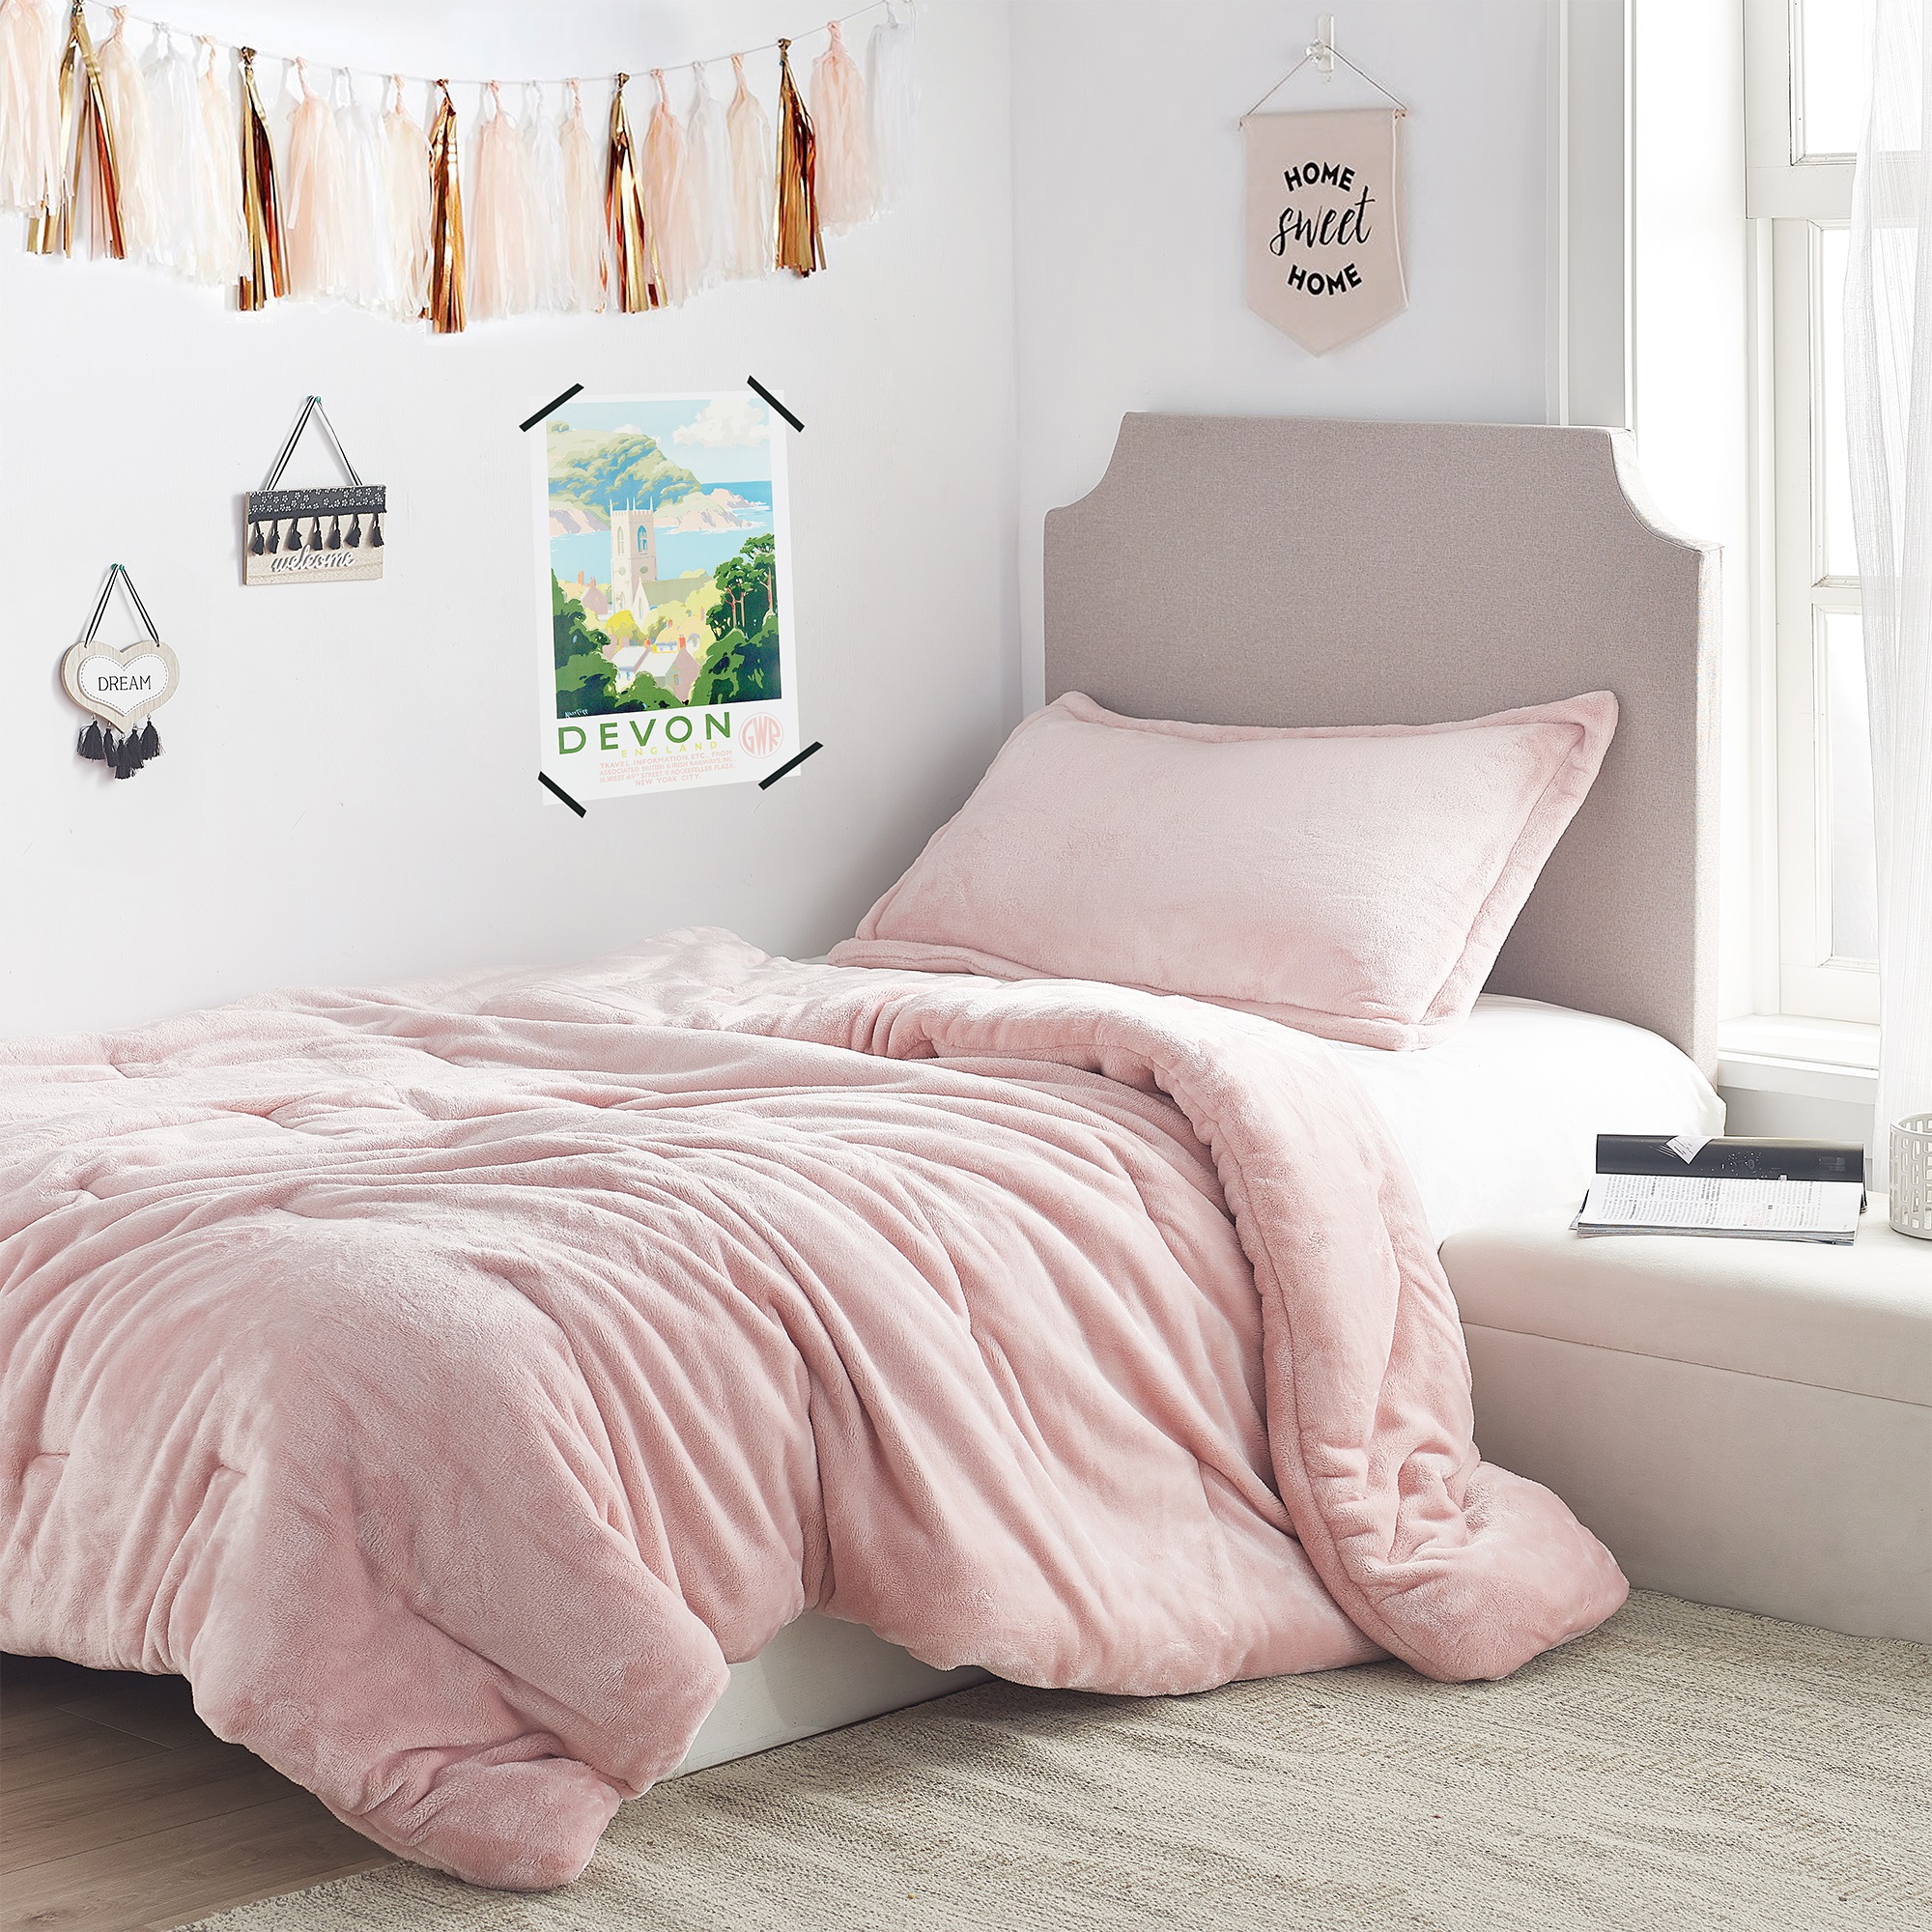 Coma Inducer Oversized Comforter - Me Sooo Comfy - Rose Quartz